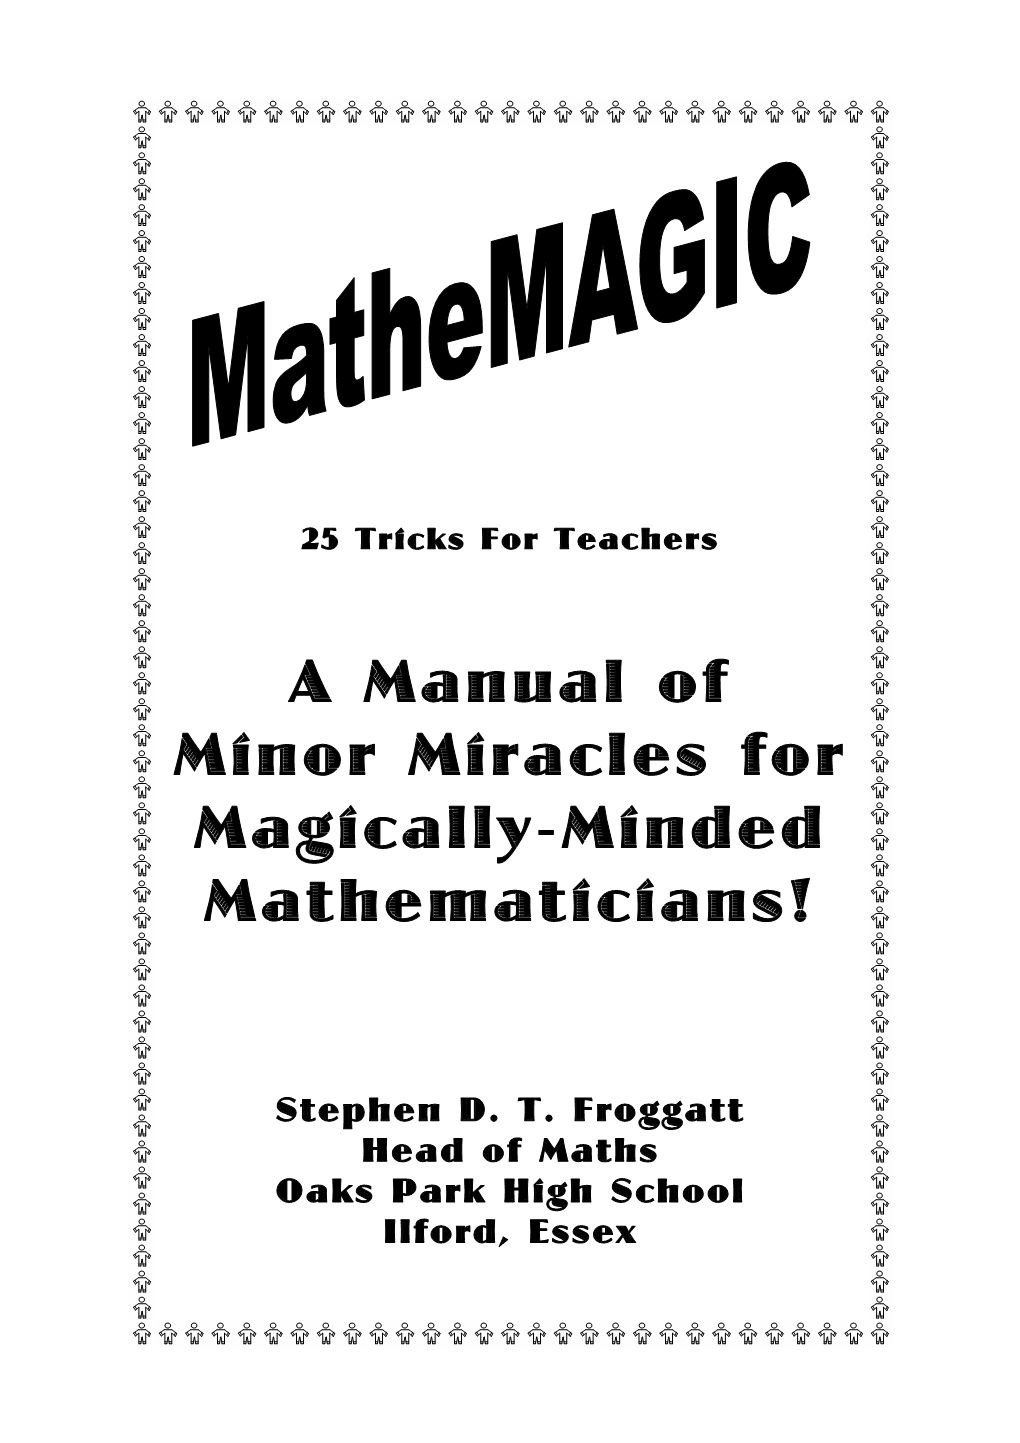 Mathemagic: 25 Tricks for Teachers